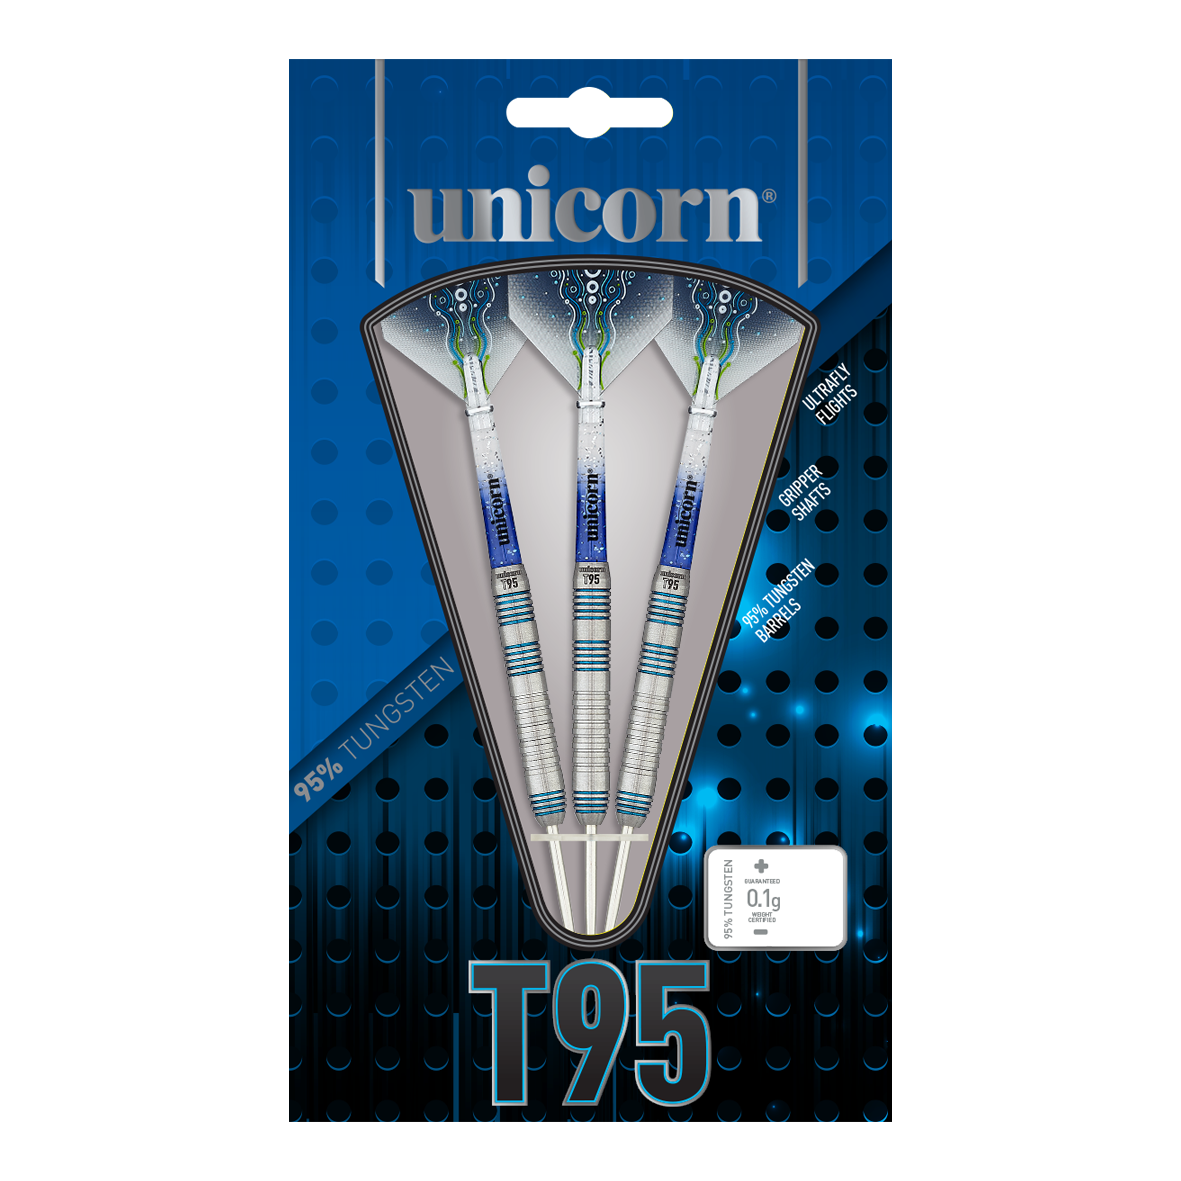 Unicorn T95 Core XL Blue Style 2 stalen darts - 23 g